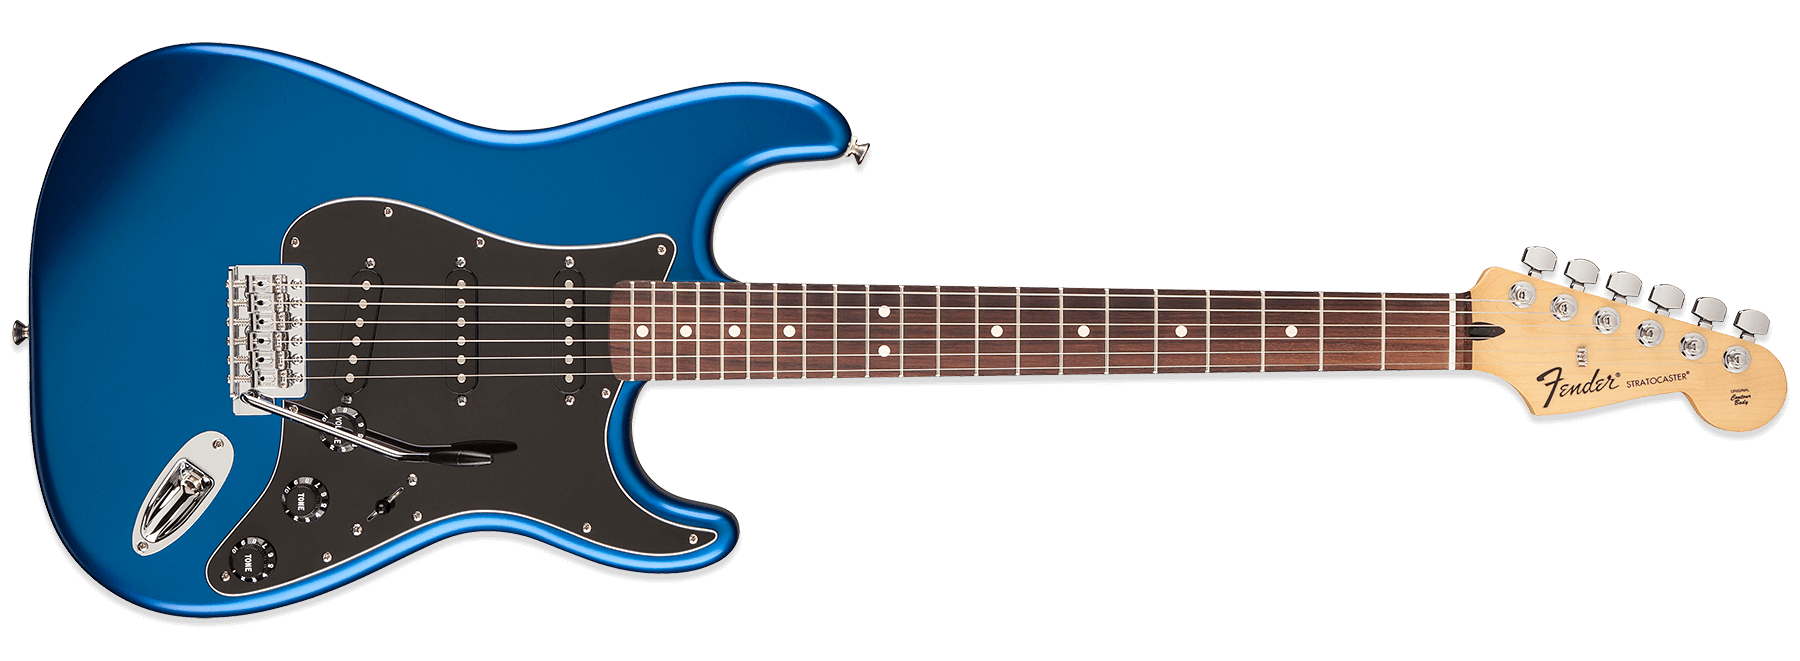 Fender Standard Stratocaster Satin Ocean Blue Candy